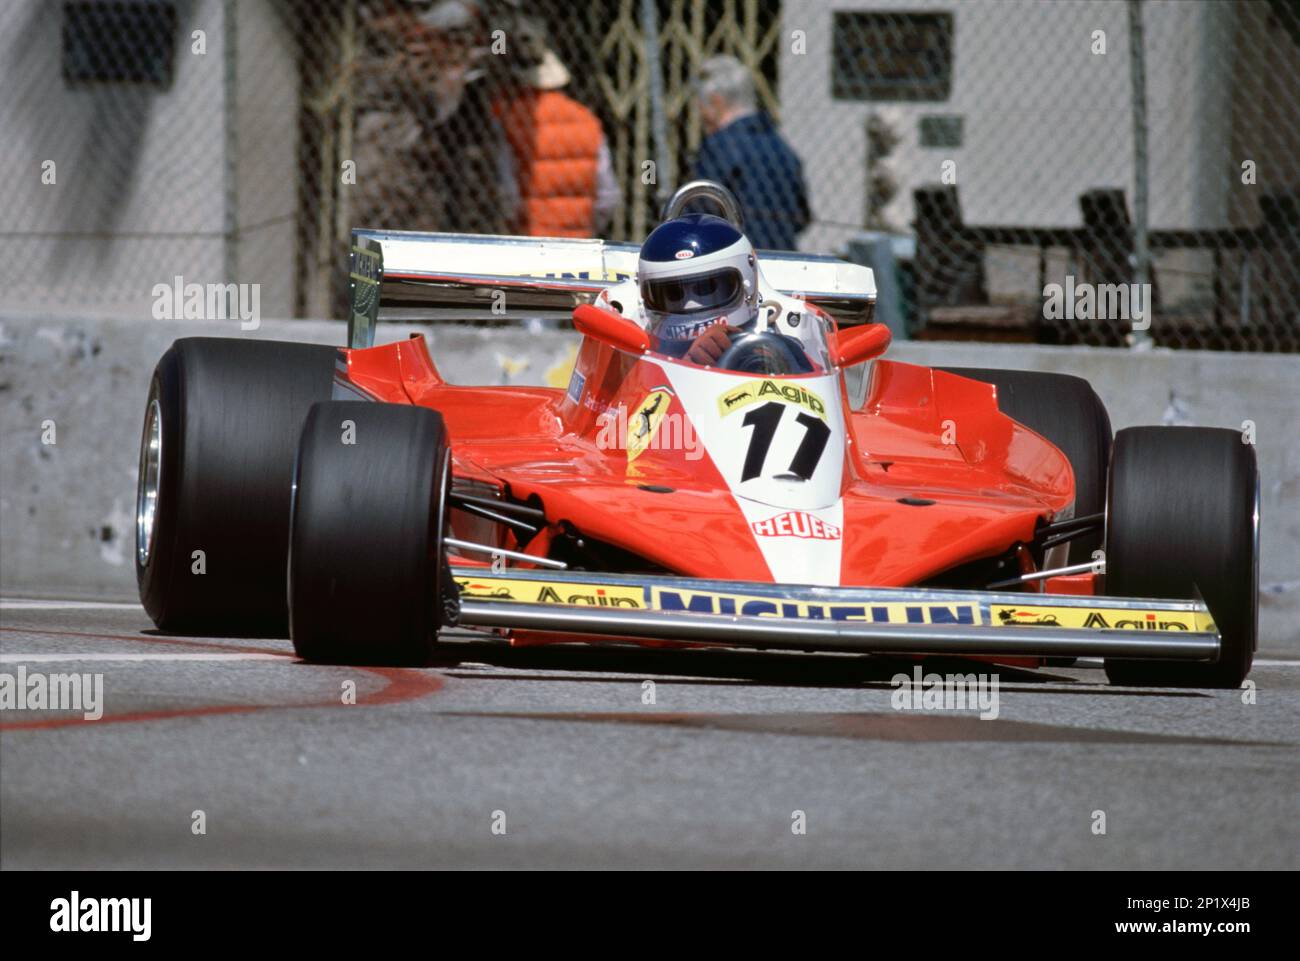 Carlos Reutemann. 1978 United States Grand Prix West Stock Photo